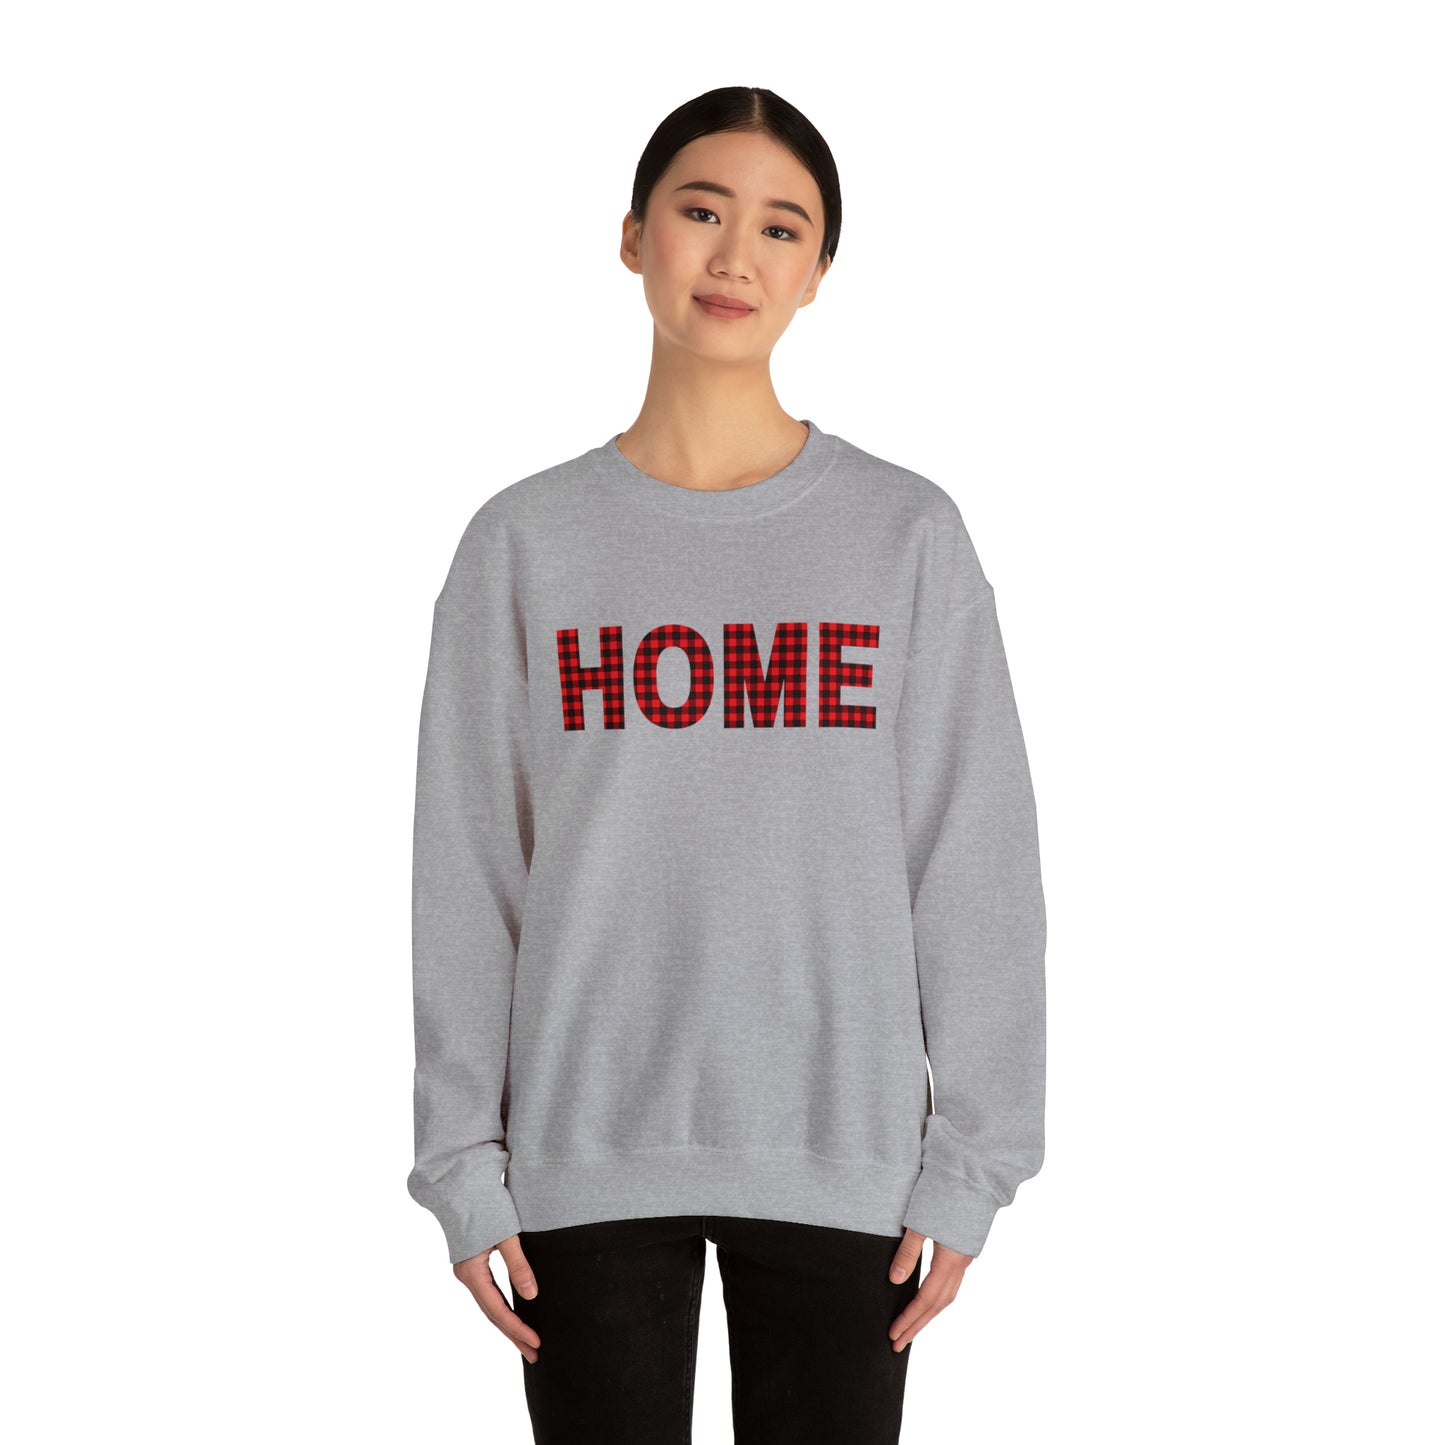 Home for the Holidays Merry Christmas Sweatshirt